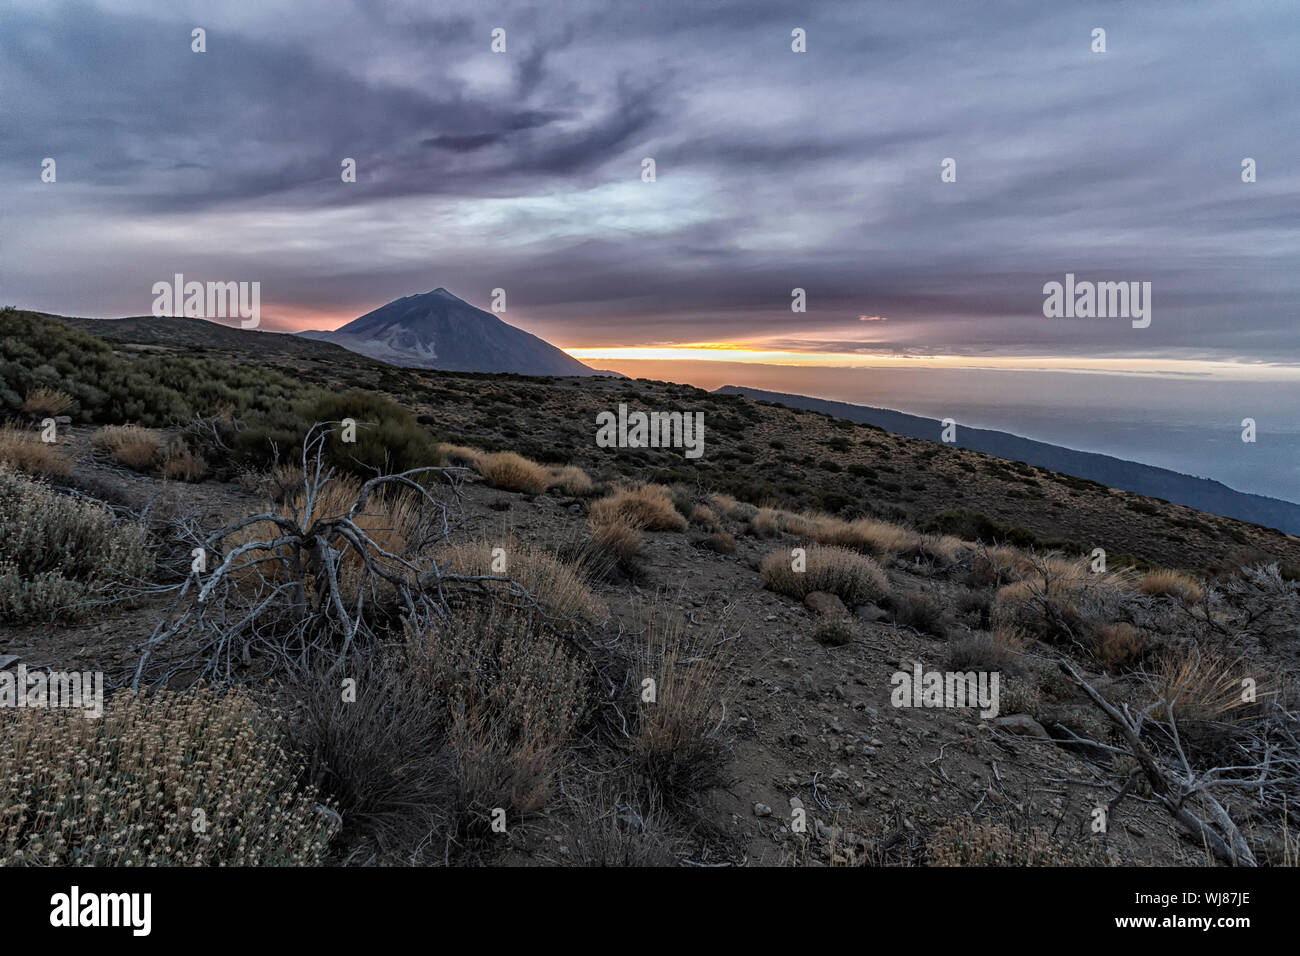 the teide volcano at sunset Stock Photo